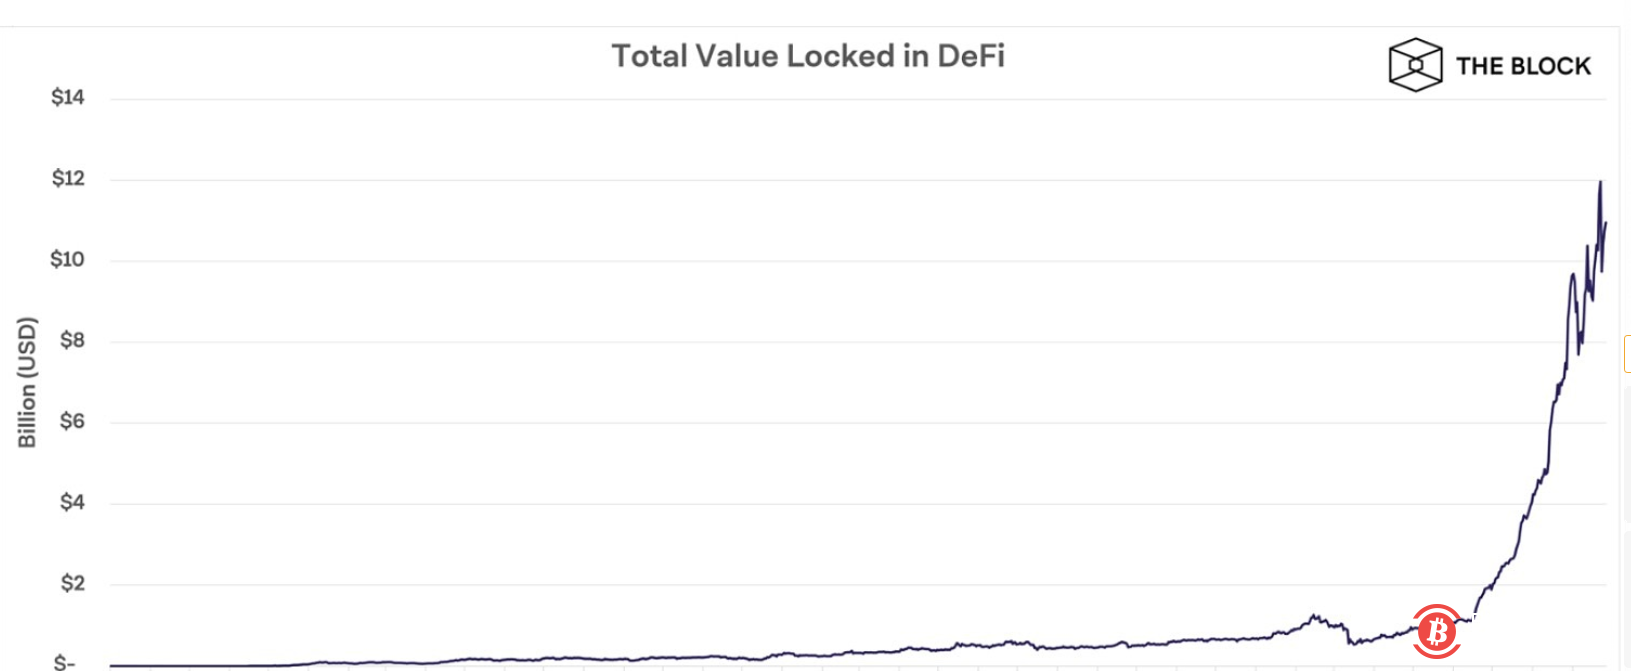  DeFi协议锁定总价值突破100亿美元 